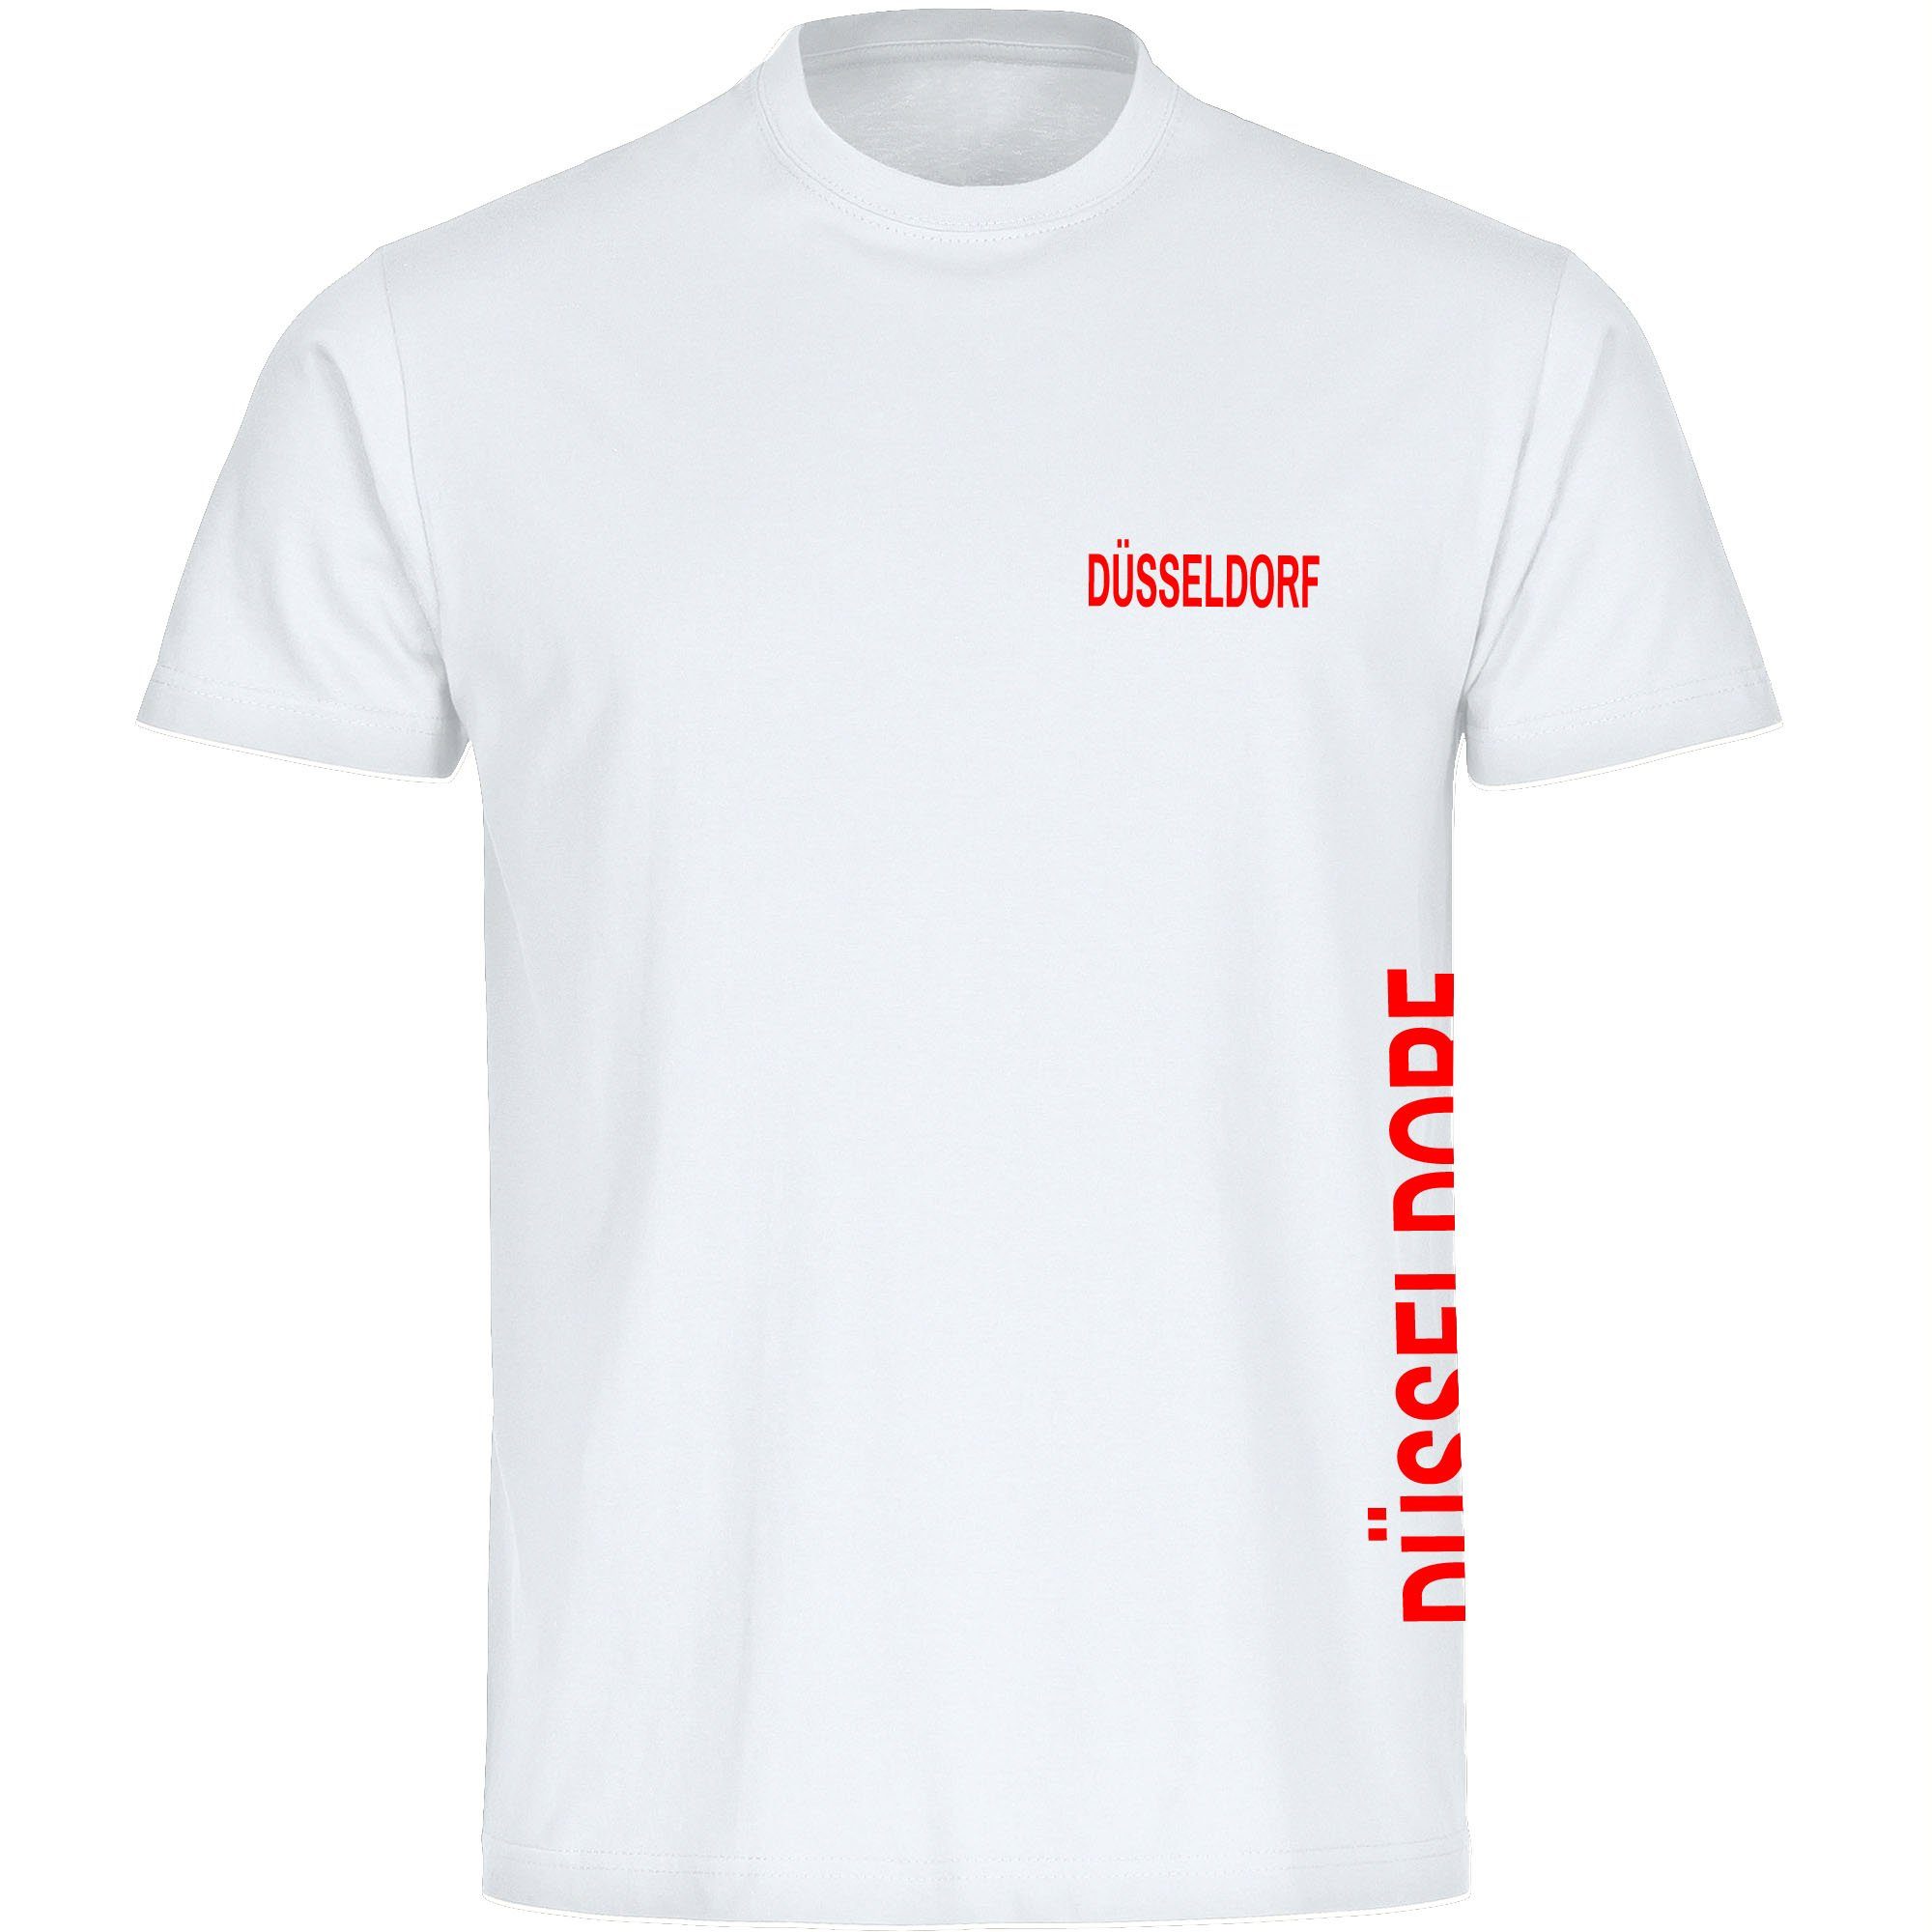 multifanshop T-Shirt Kinder Düsseldorf - Brust & Seite - Boy Girl